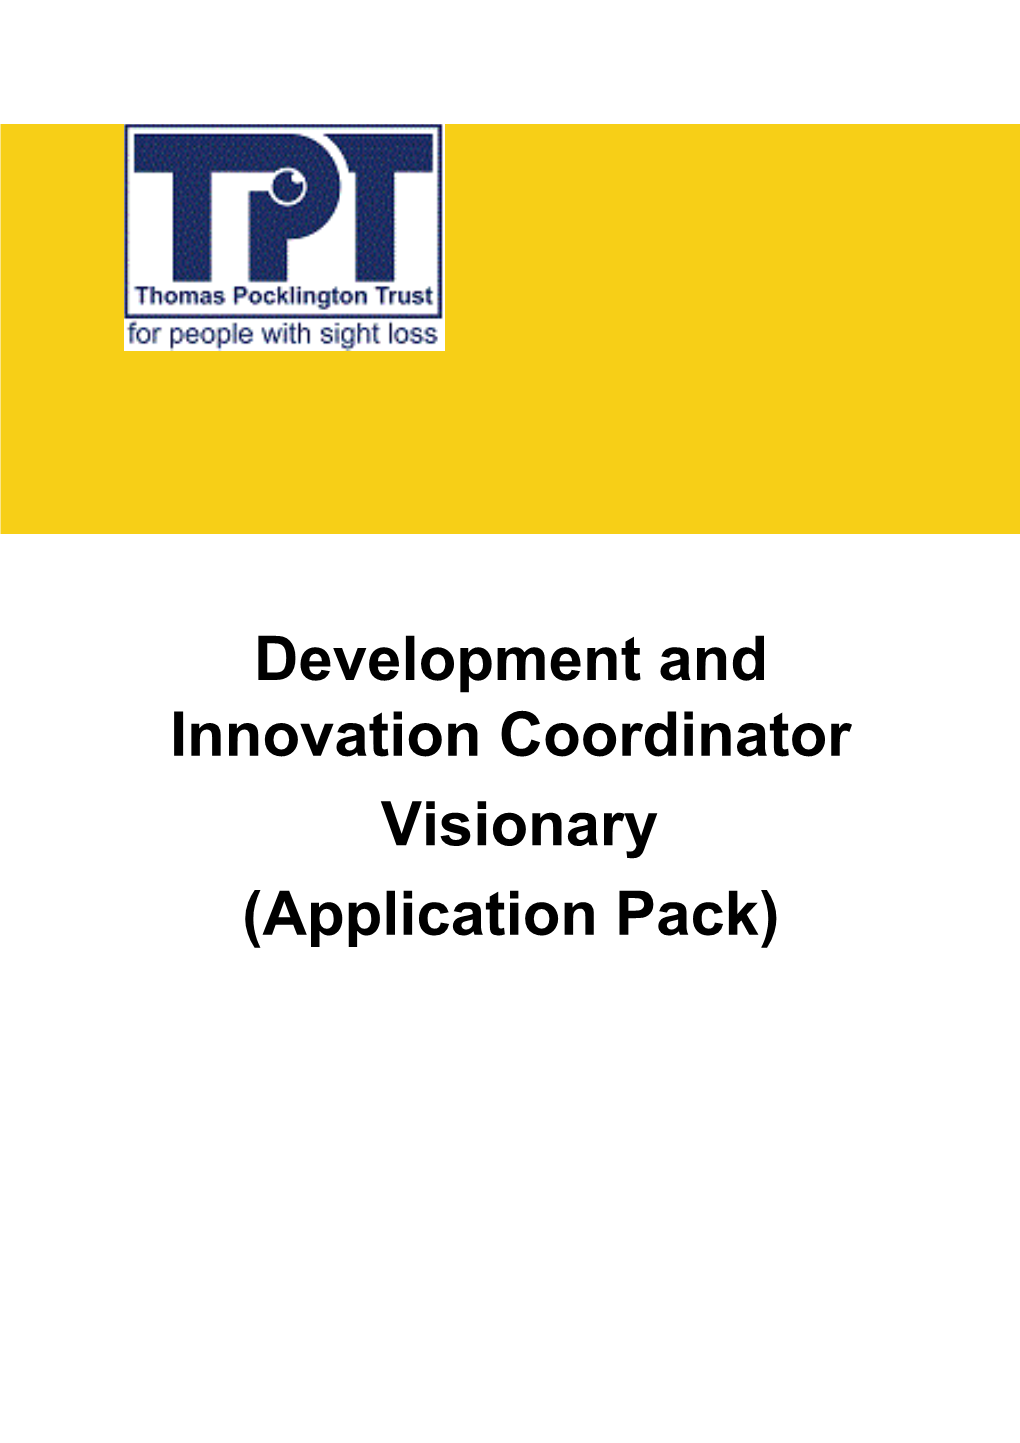 Development and Innovation Coordinator